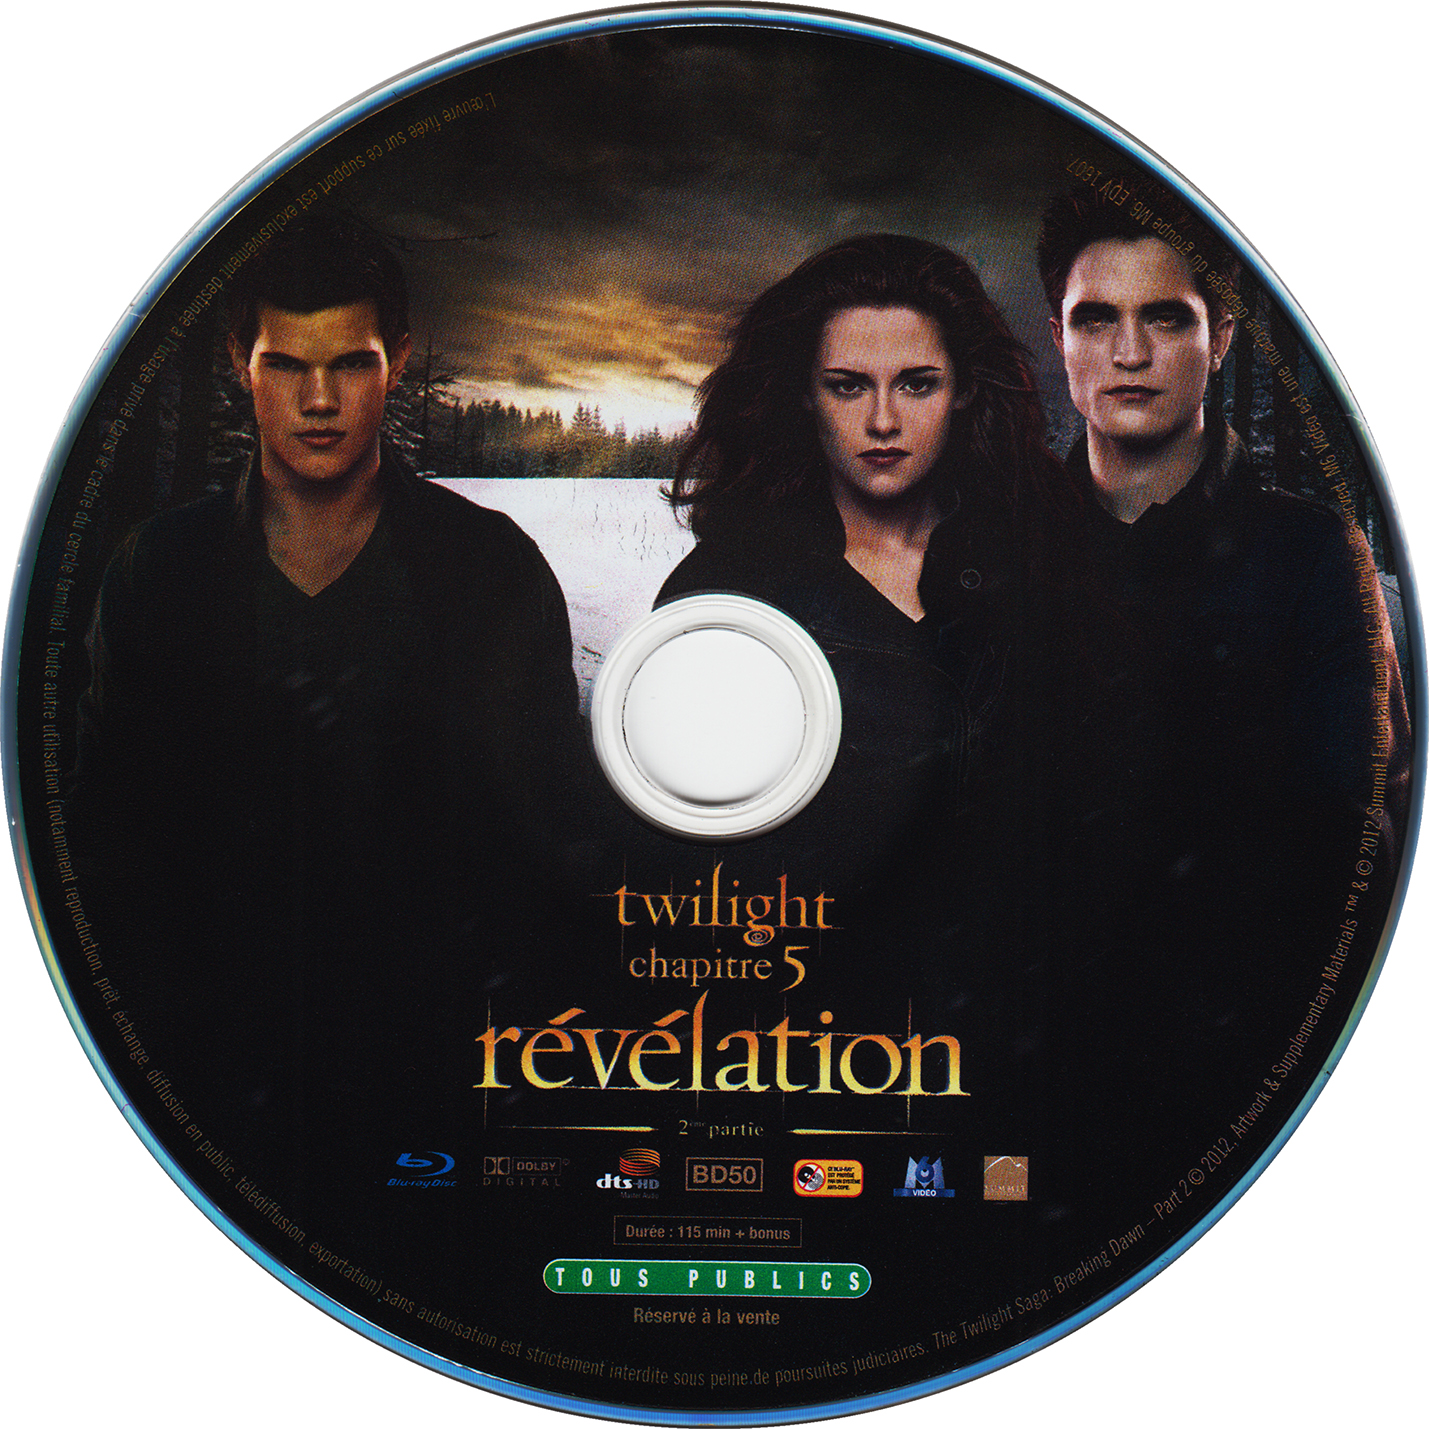 Twilight Chapitre 5 rvlation (BLU-RAY)